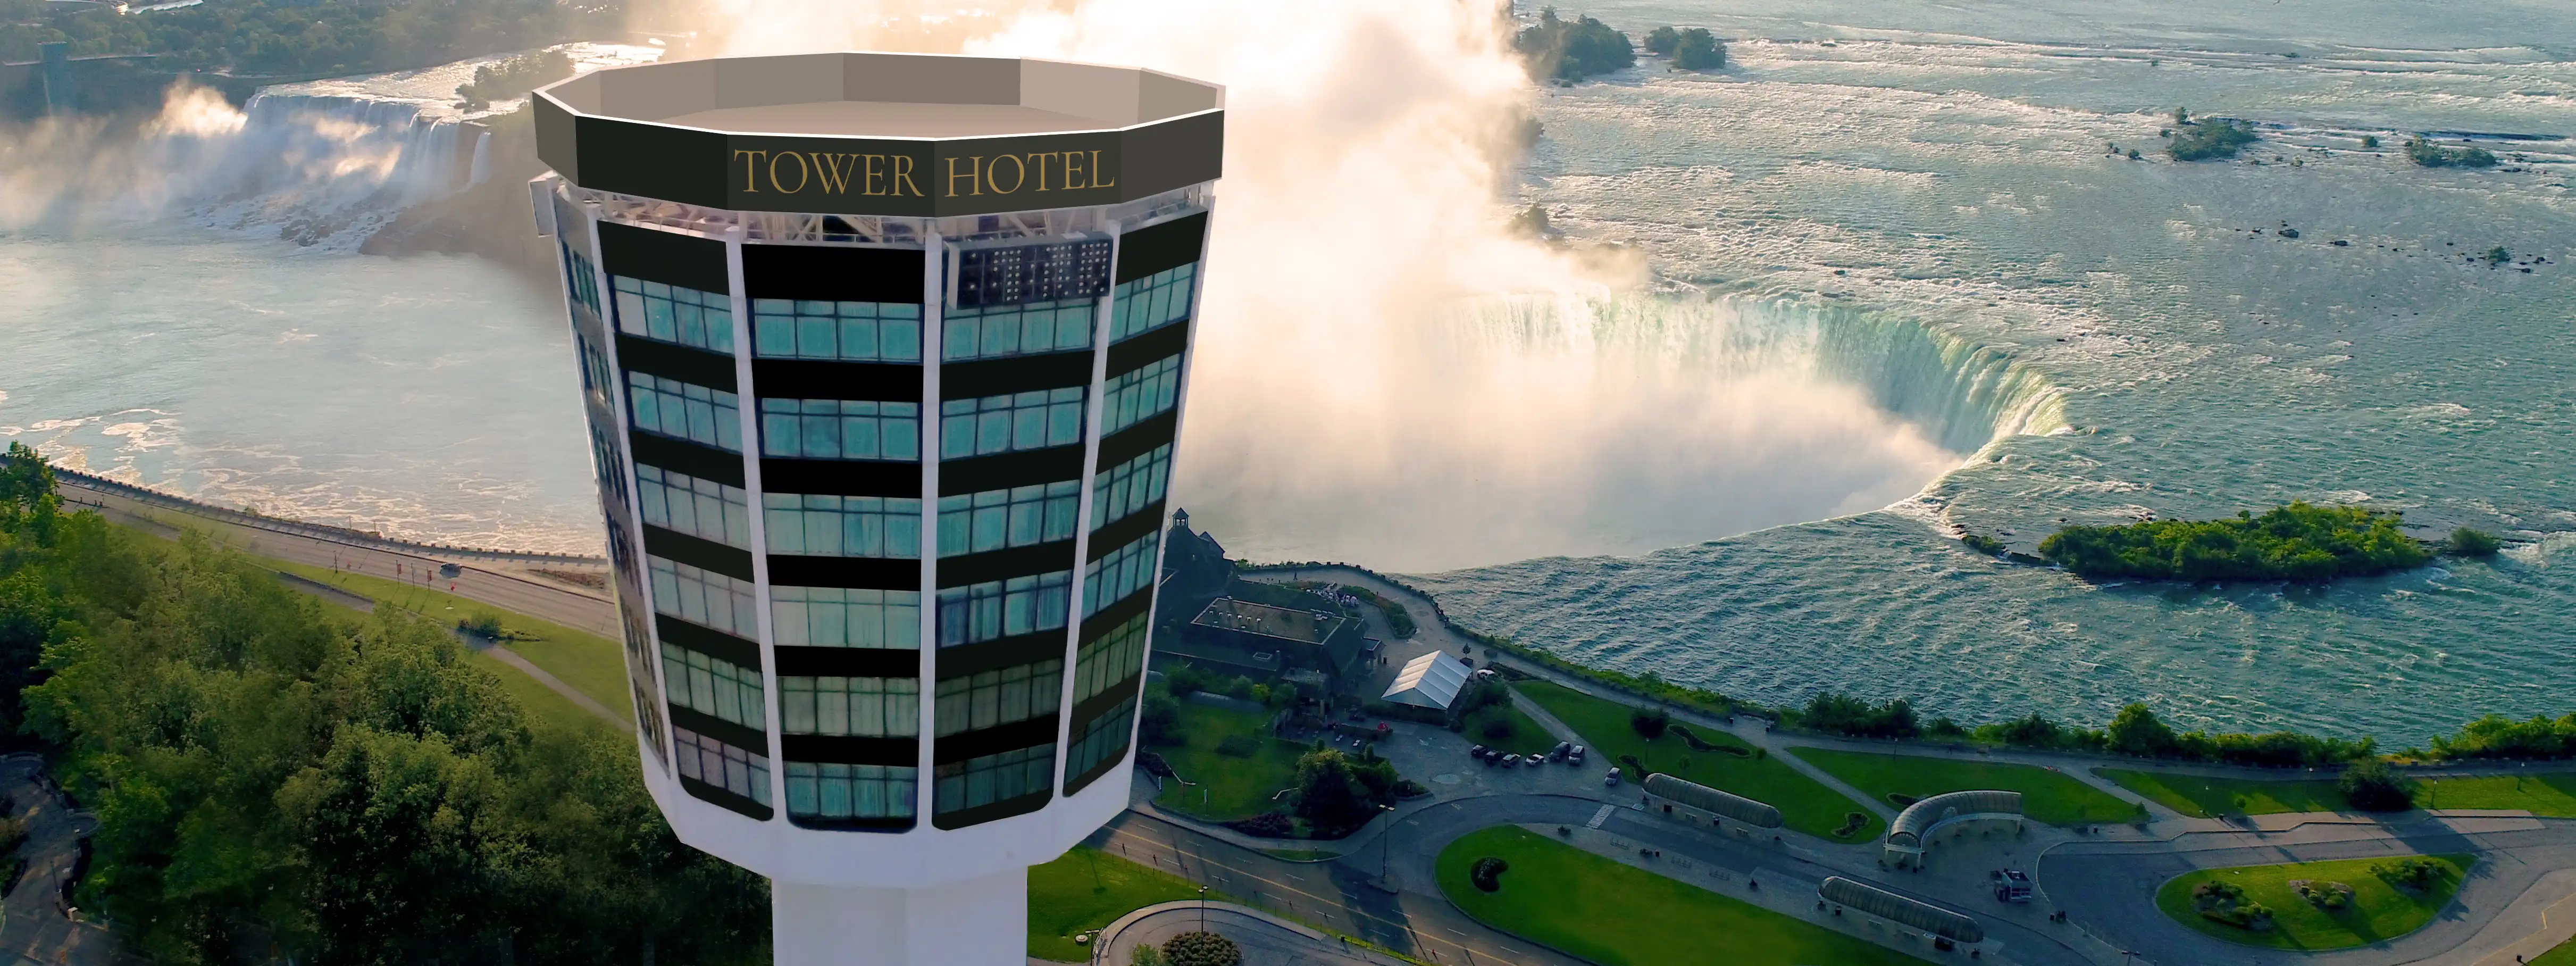 Tower Hotel overlooking Niagara Falls and Niagara Escarpment.